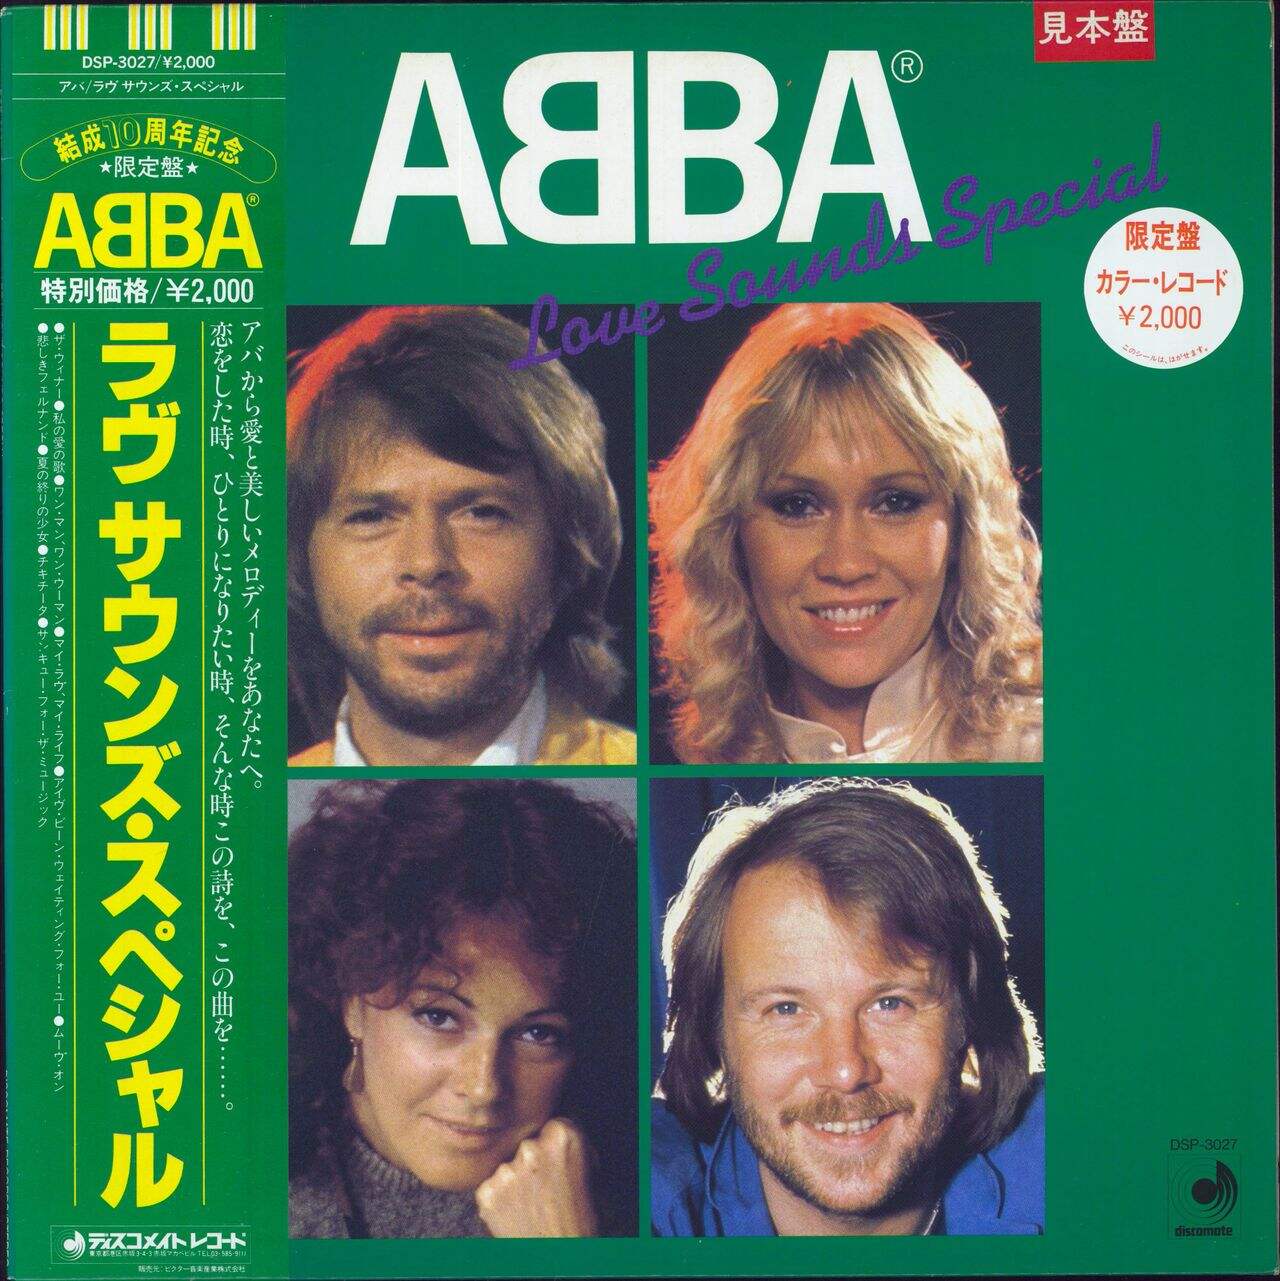 Abba Love Sounds Special - Green Vinyl + Stickered Sleeve + Obi Japanese Promo Vinyl LP